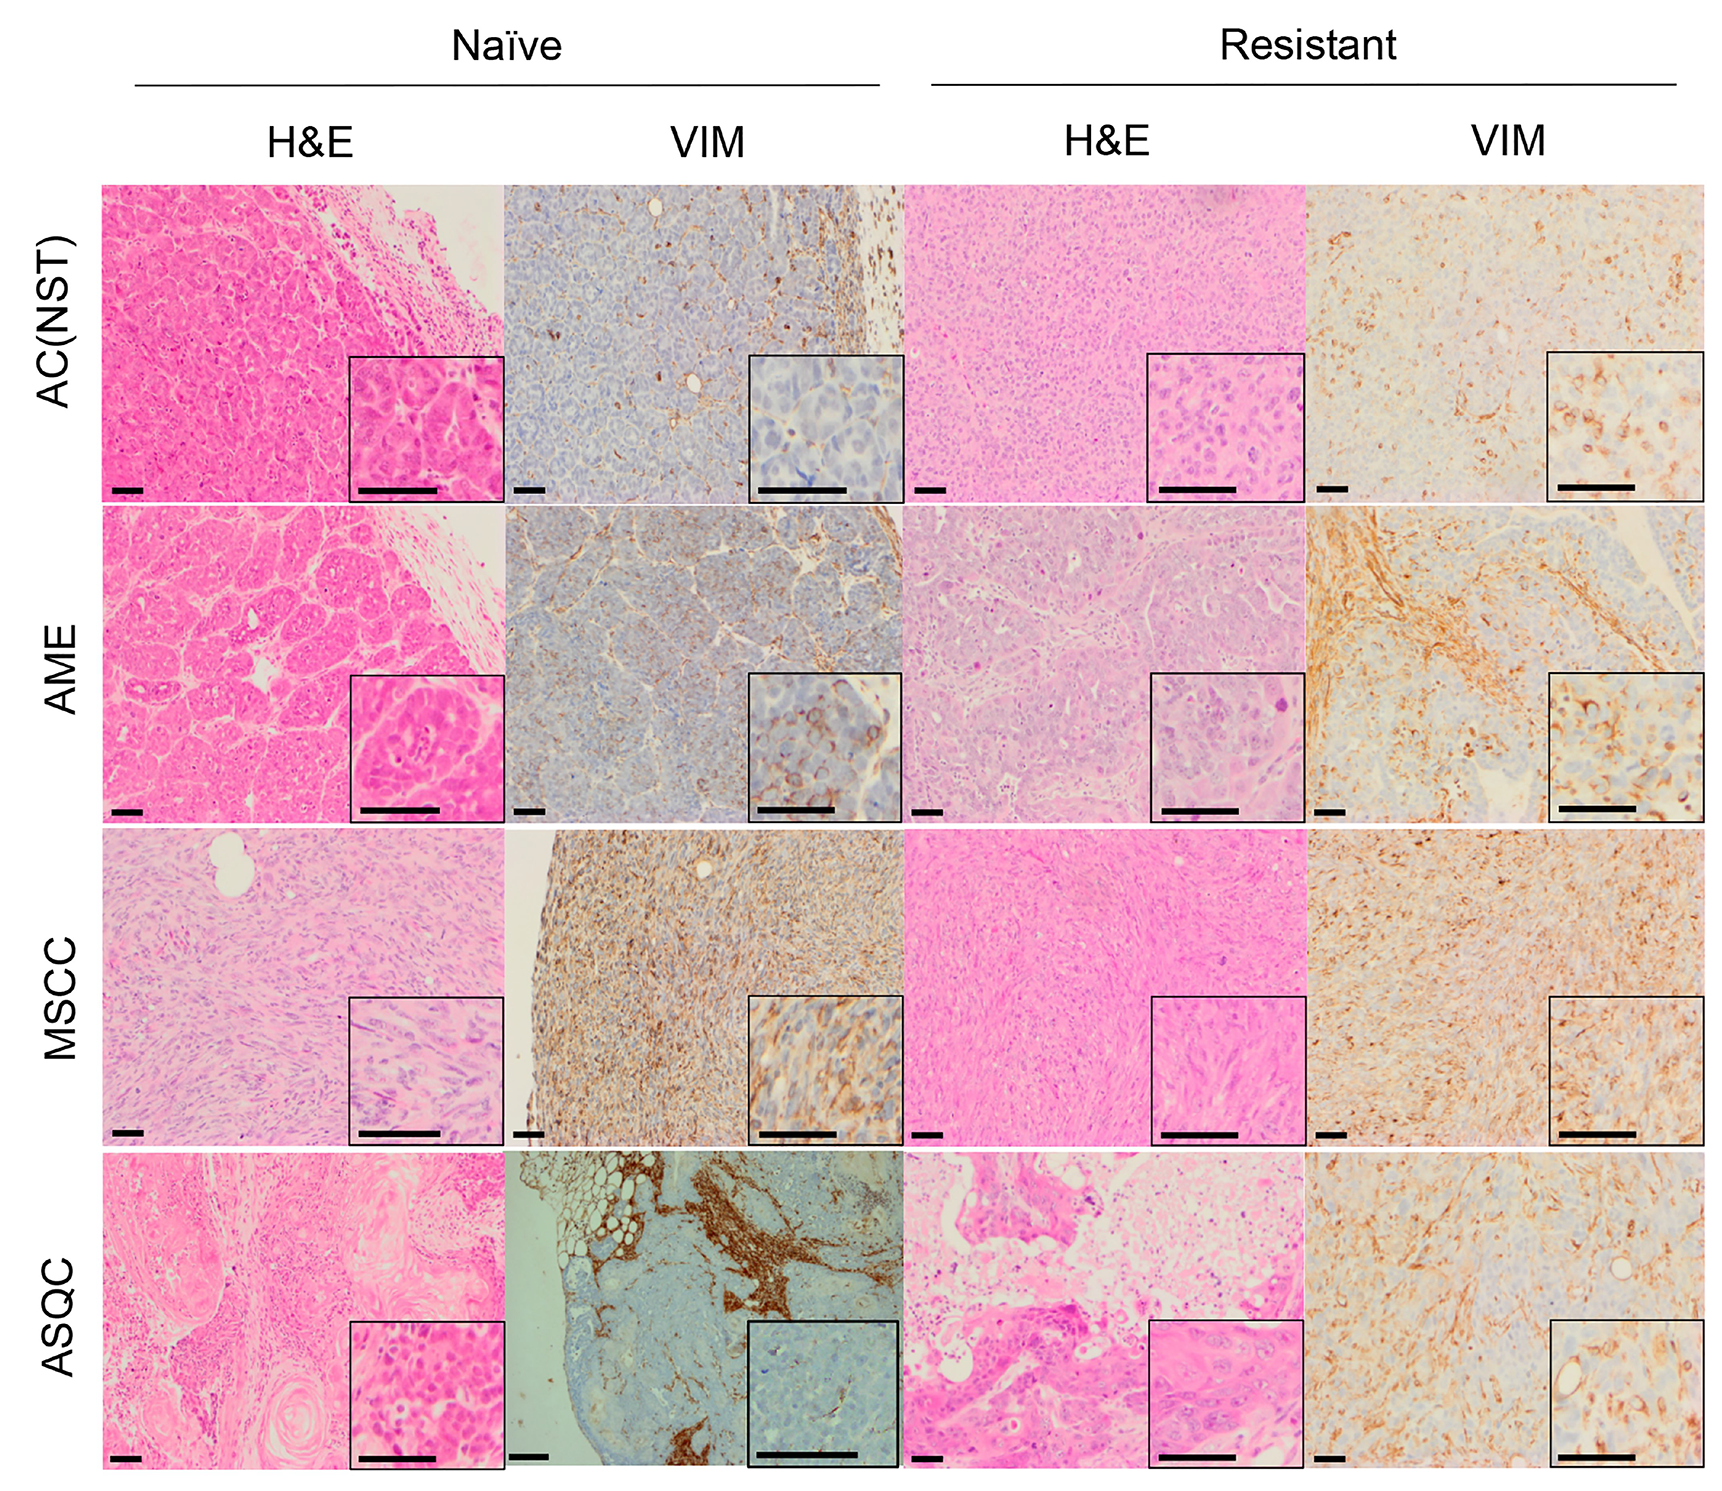 H&E and vimentin staining of tumour phenotypes observed in olaparib-naïve and olaparib-resistant tumours in the Brca2/p53-mutant mammary tumour model.